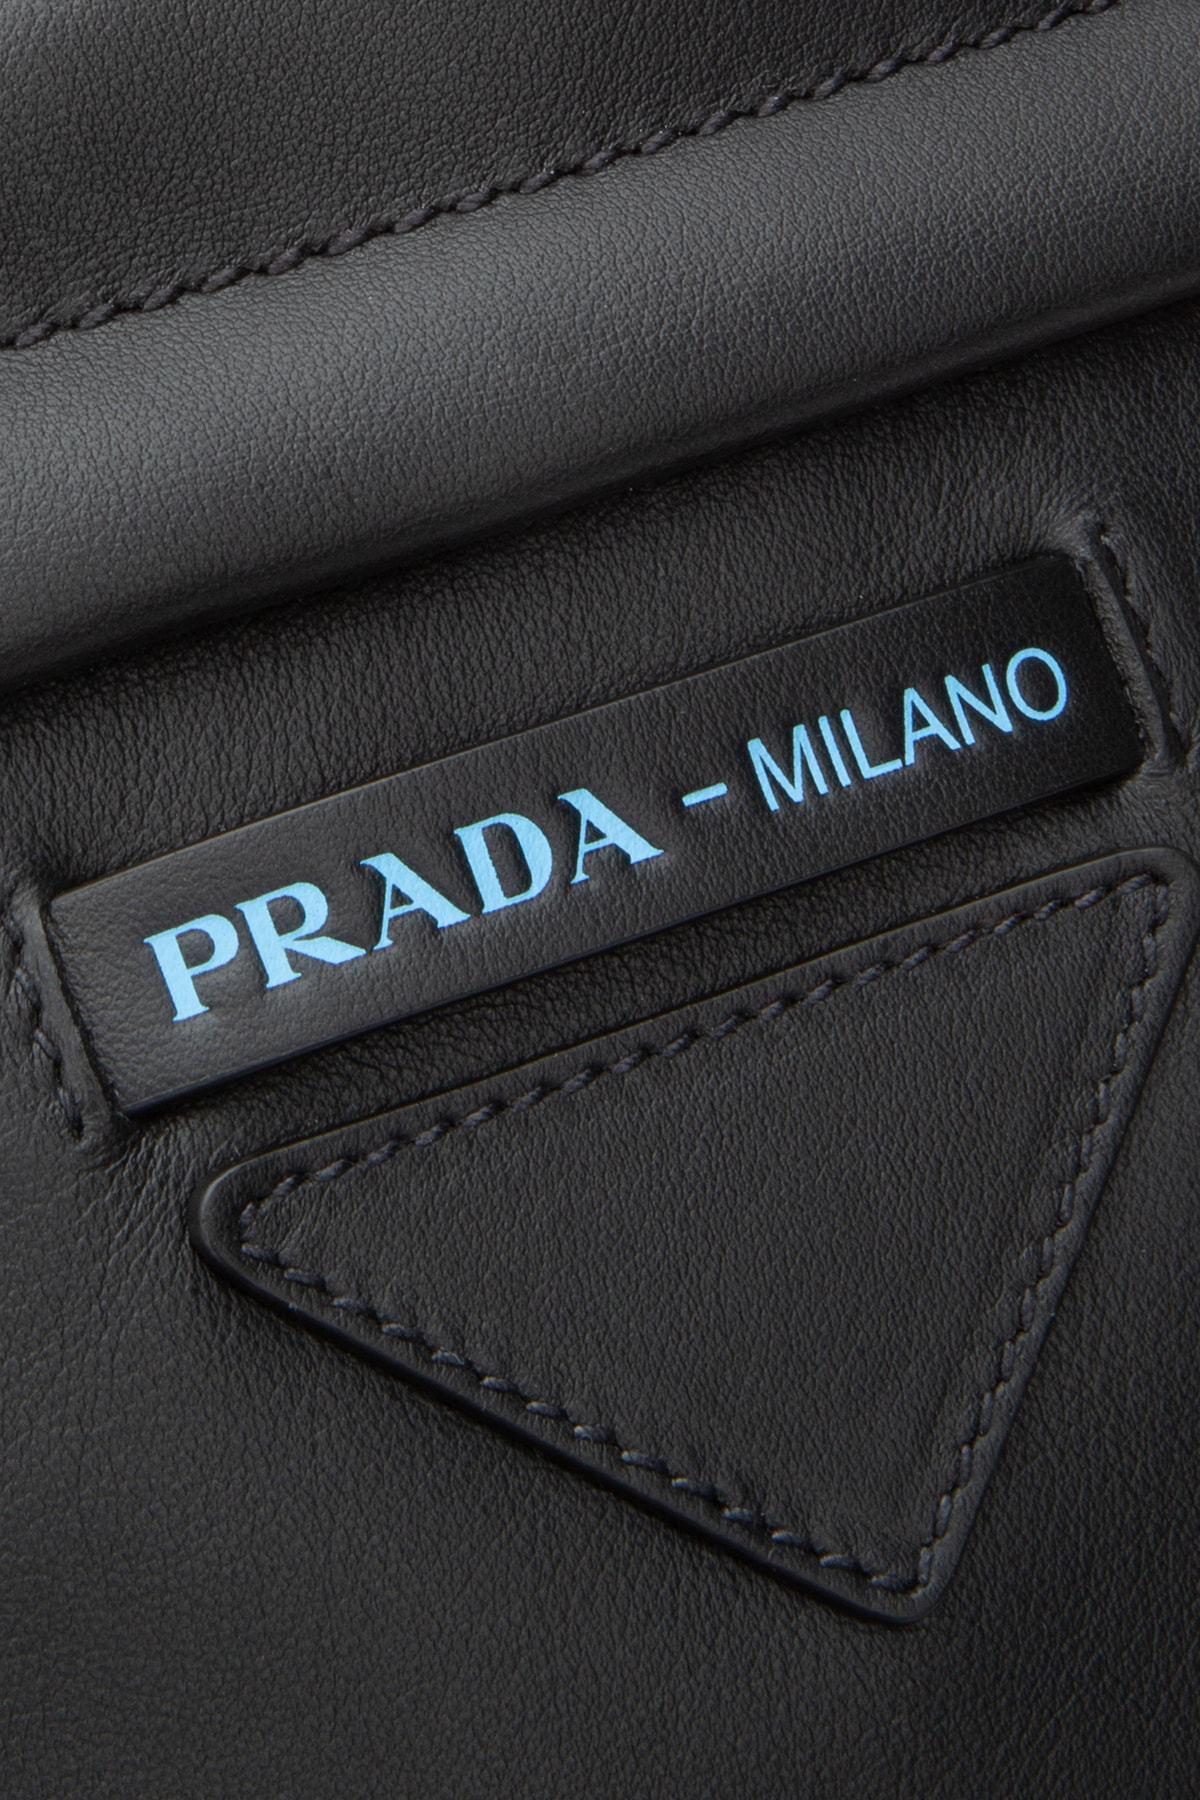 Prada Logo Leather Crossbody Bag in Black for Men - Lyst